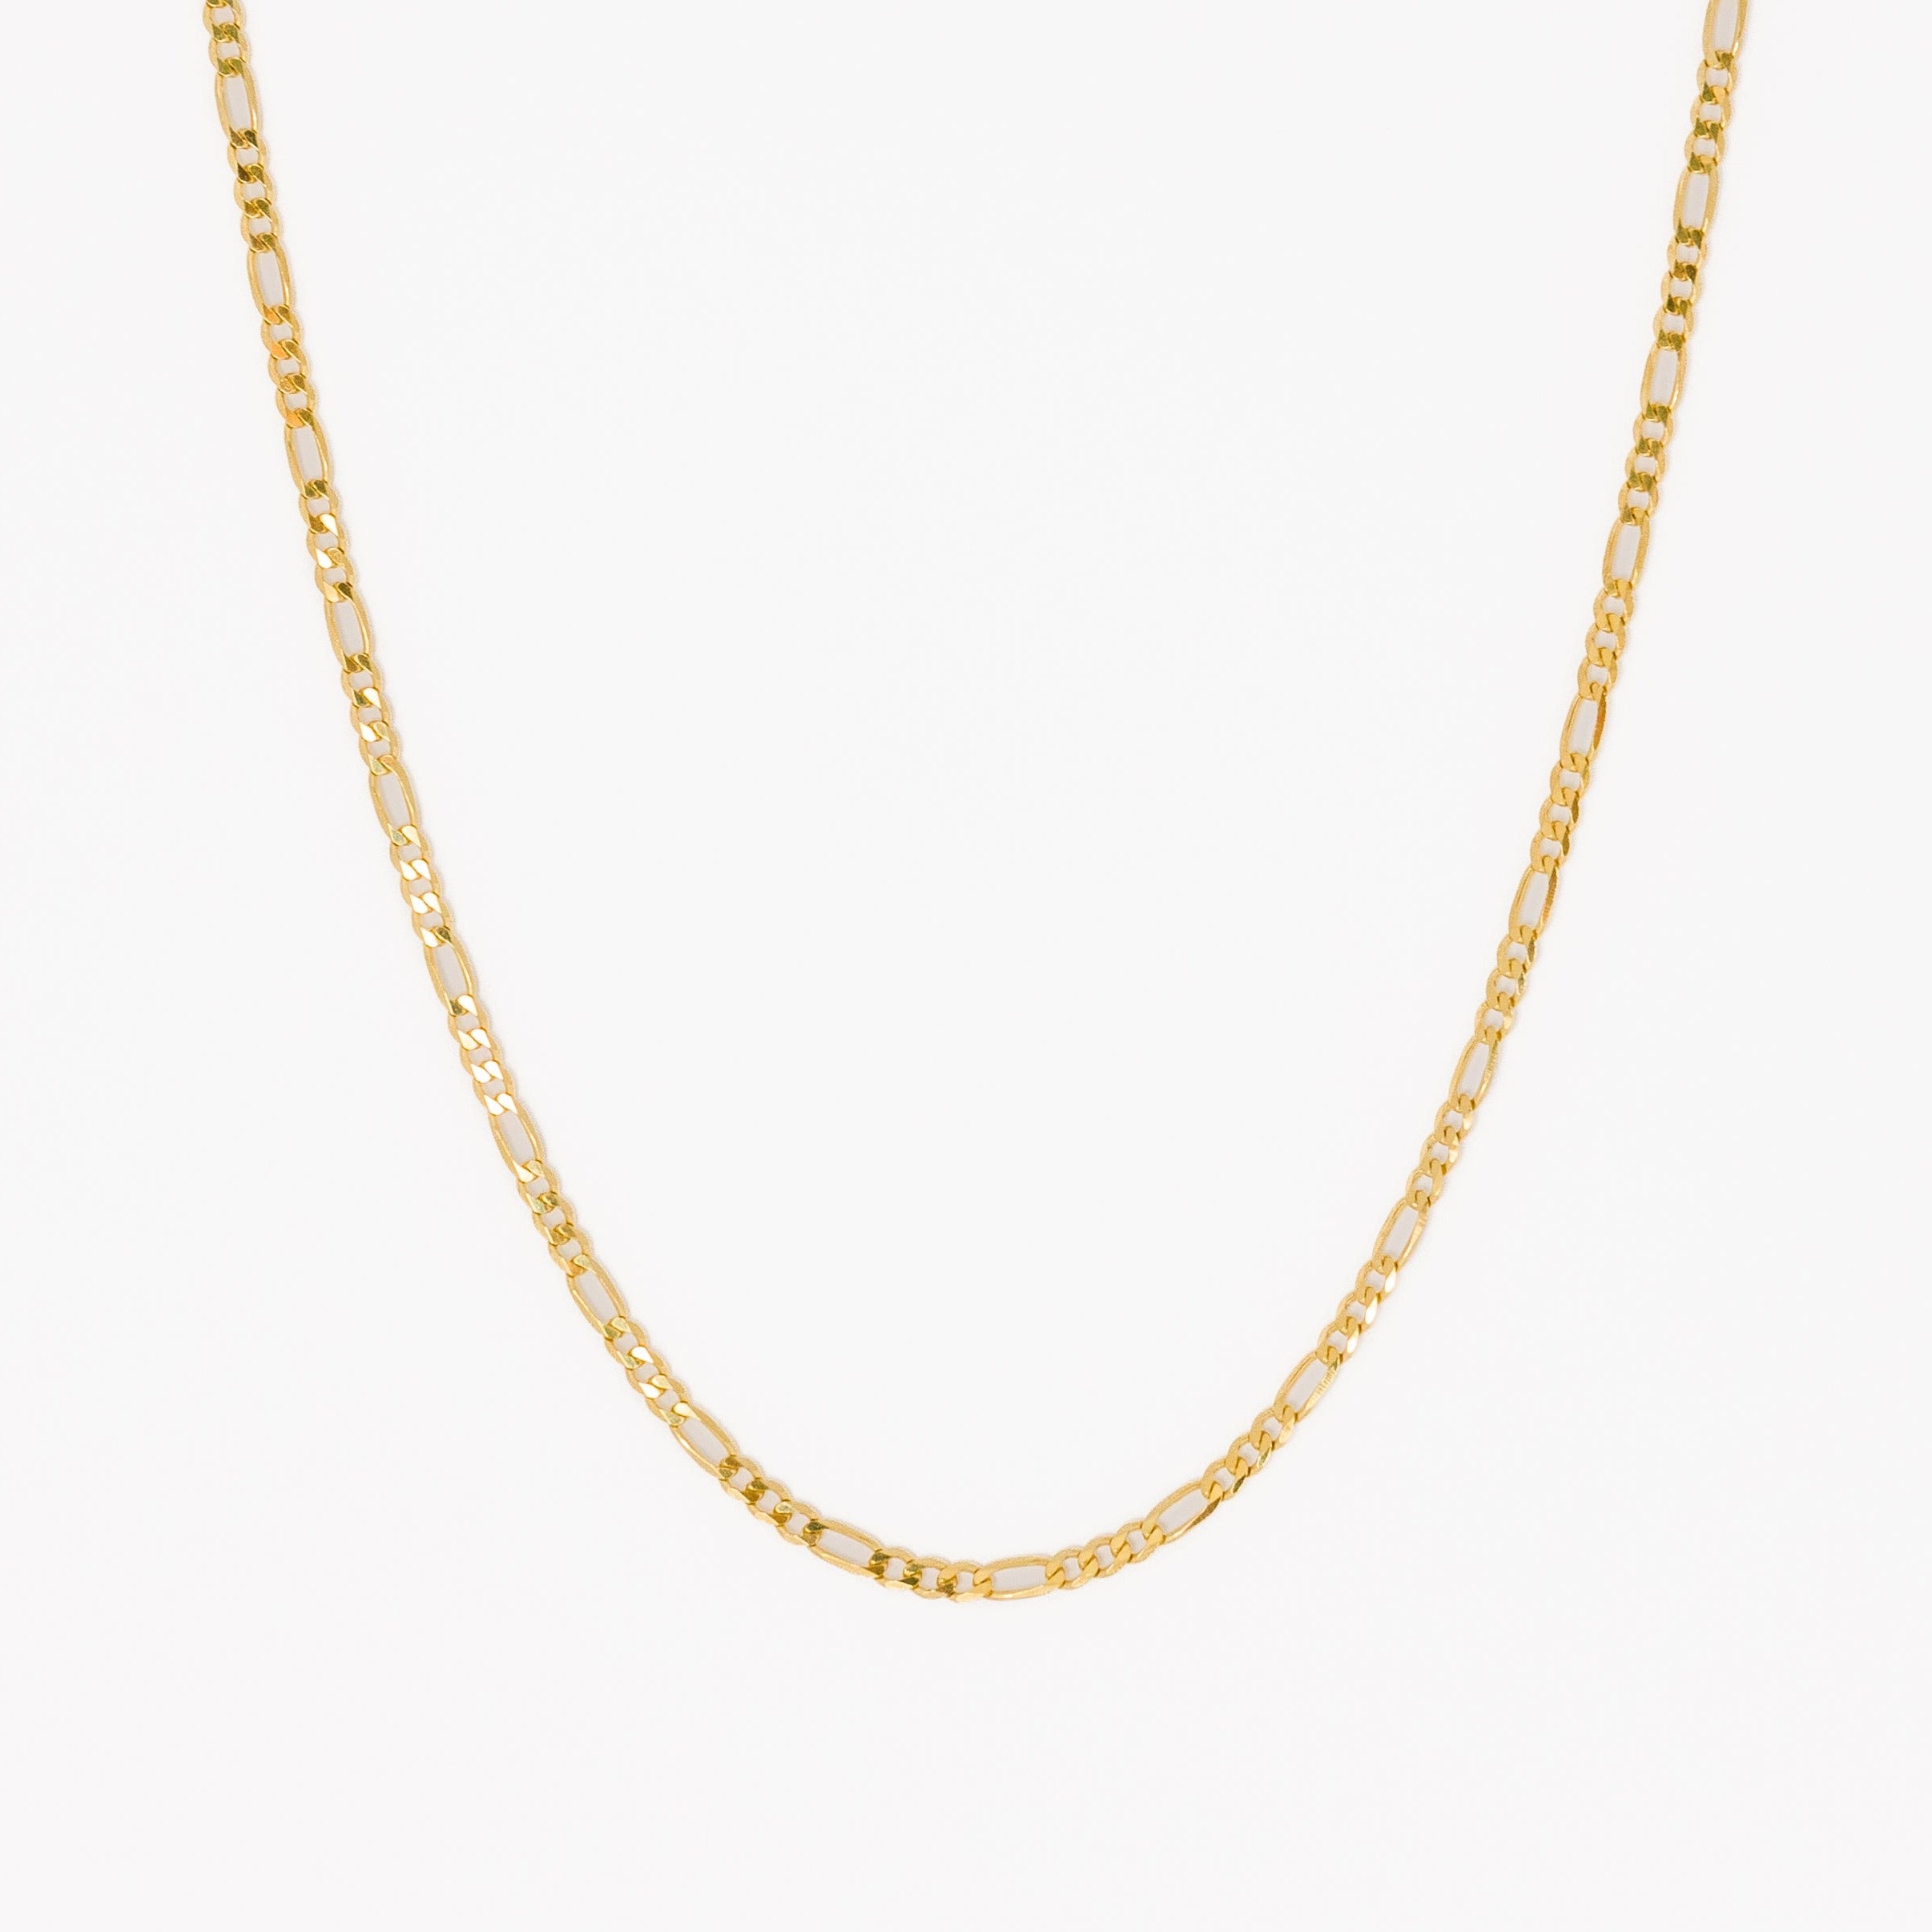 4mm Diamond Cut Franco, 14k Gold Chain Men's White Gold Necklace -  Proclamation